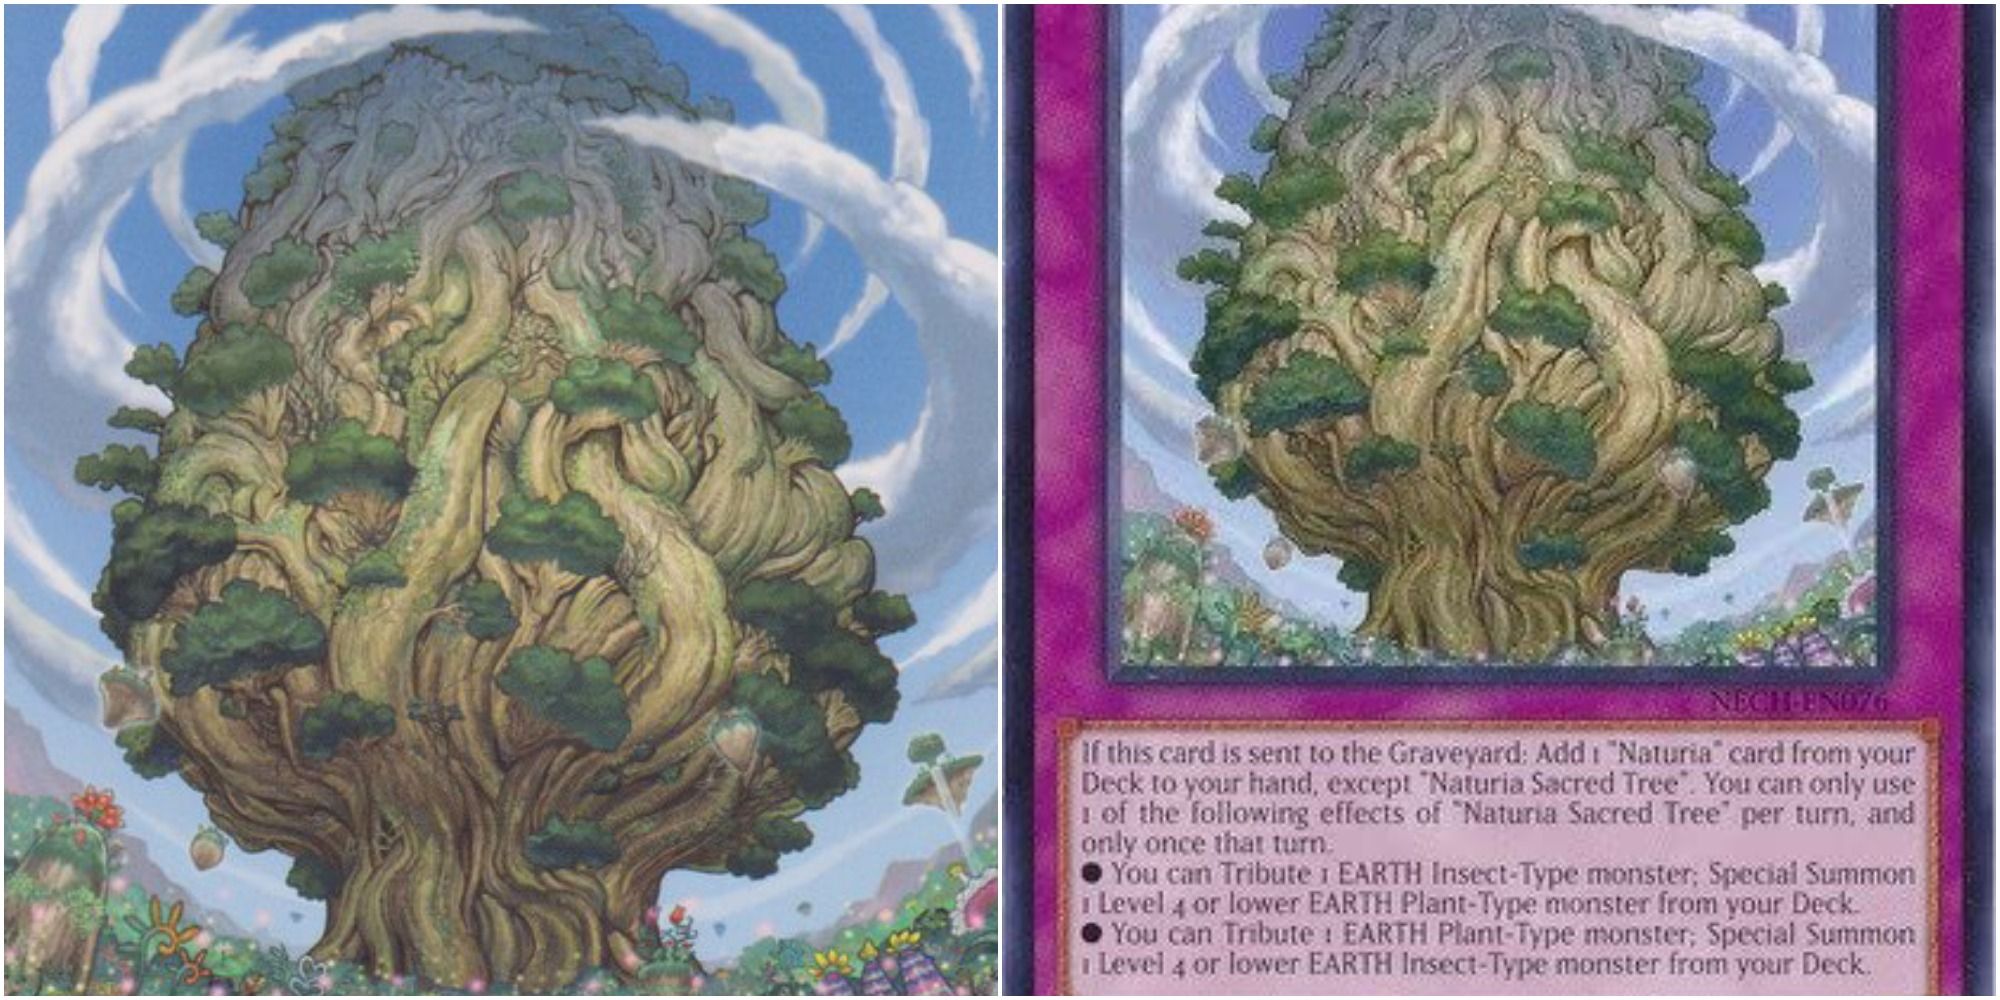 naturia sacred tree card art and text